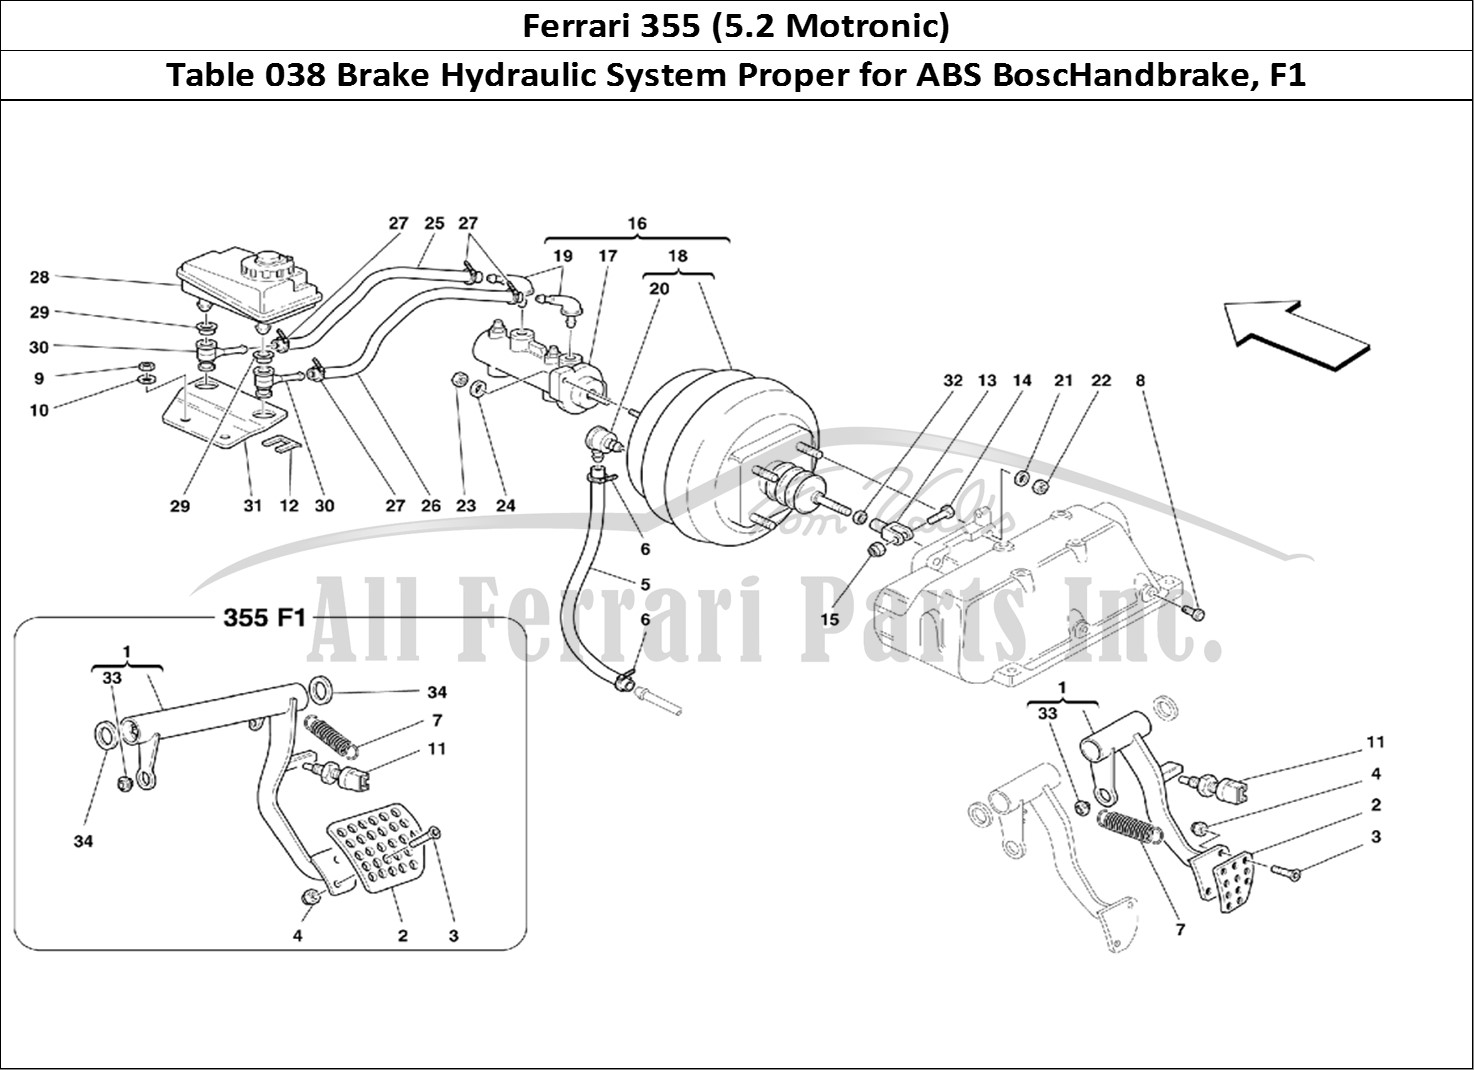 Ferrari Parts Ferrari 355 (5.2 Motronic) Page 038 Brake Hydraulic System -V